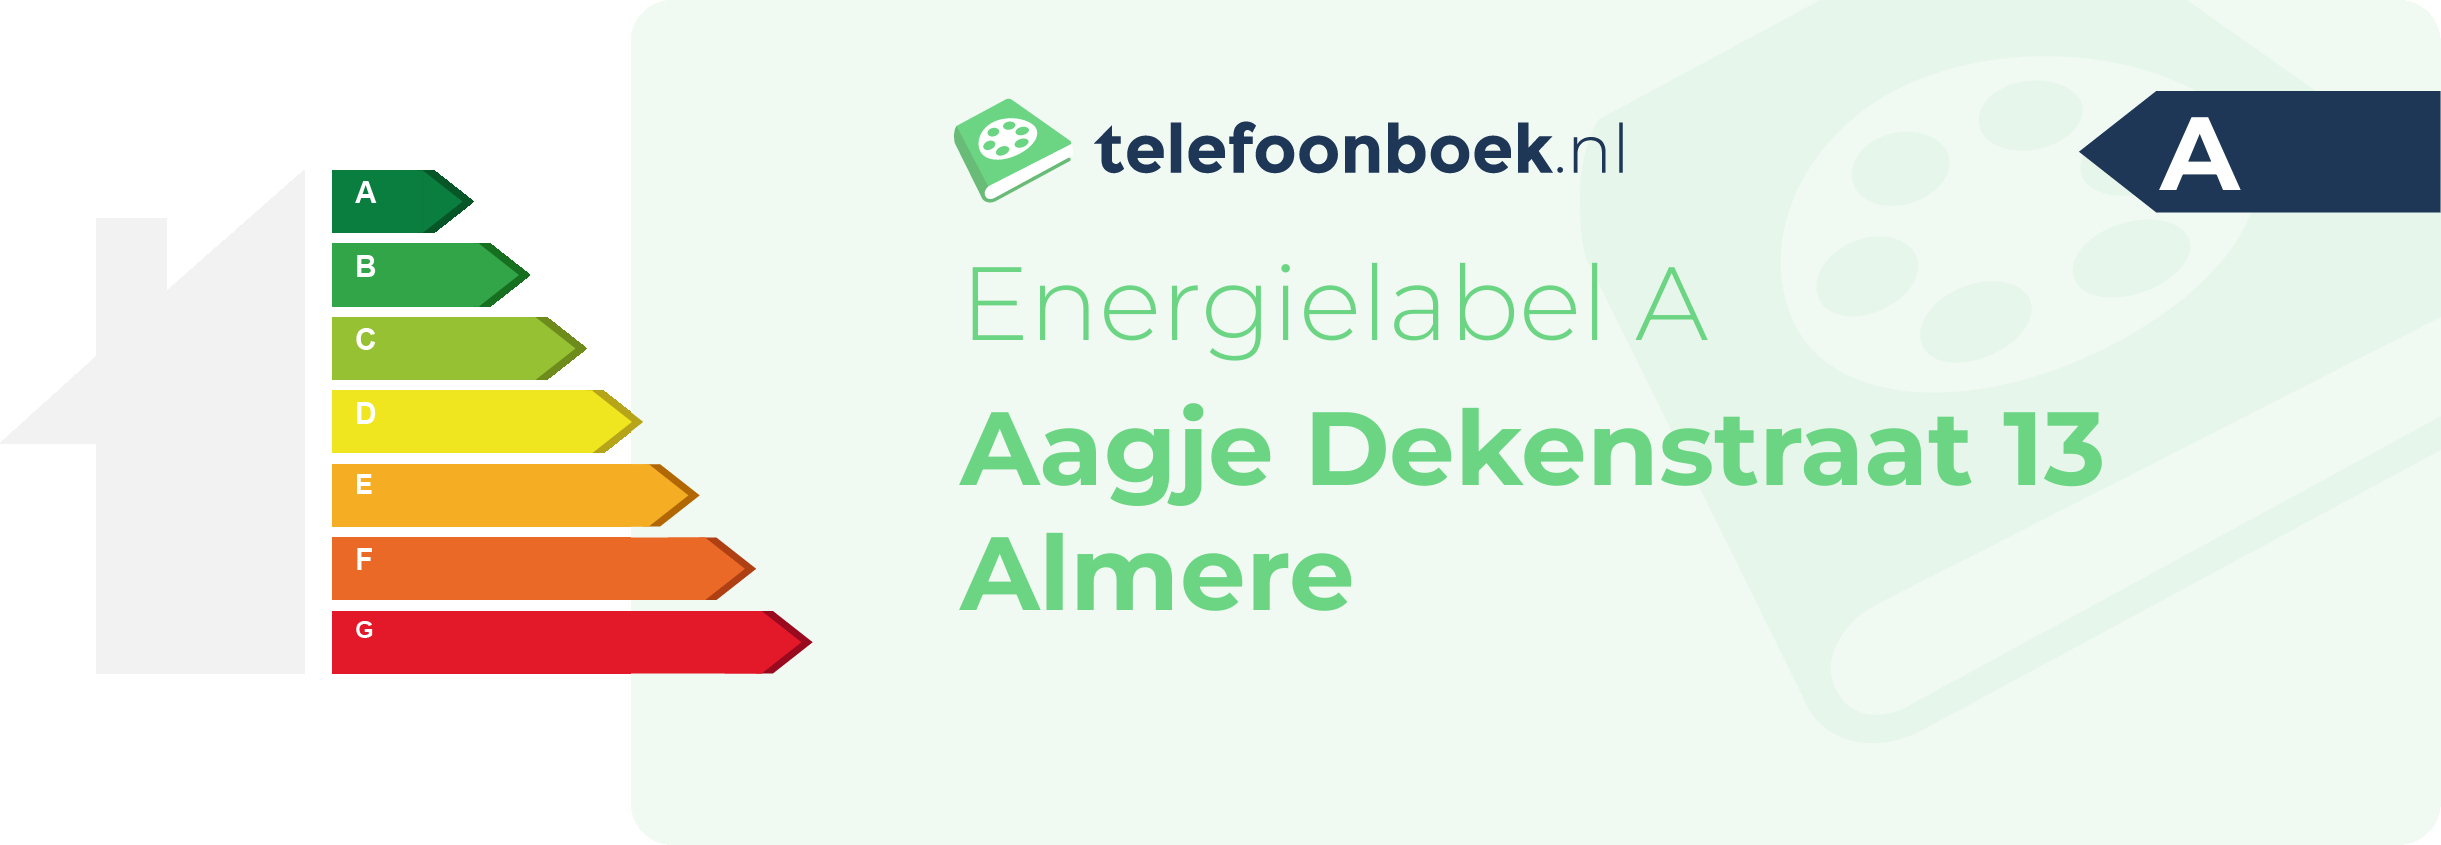 Energielabel Aagje Dekenstraat 13 Almere